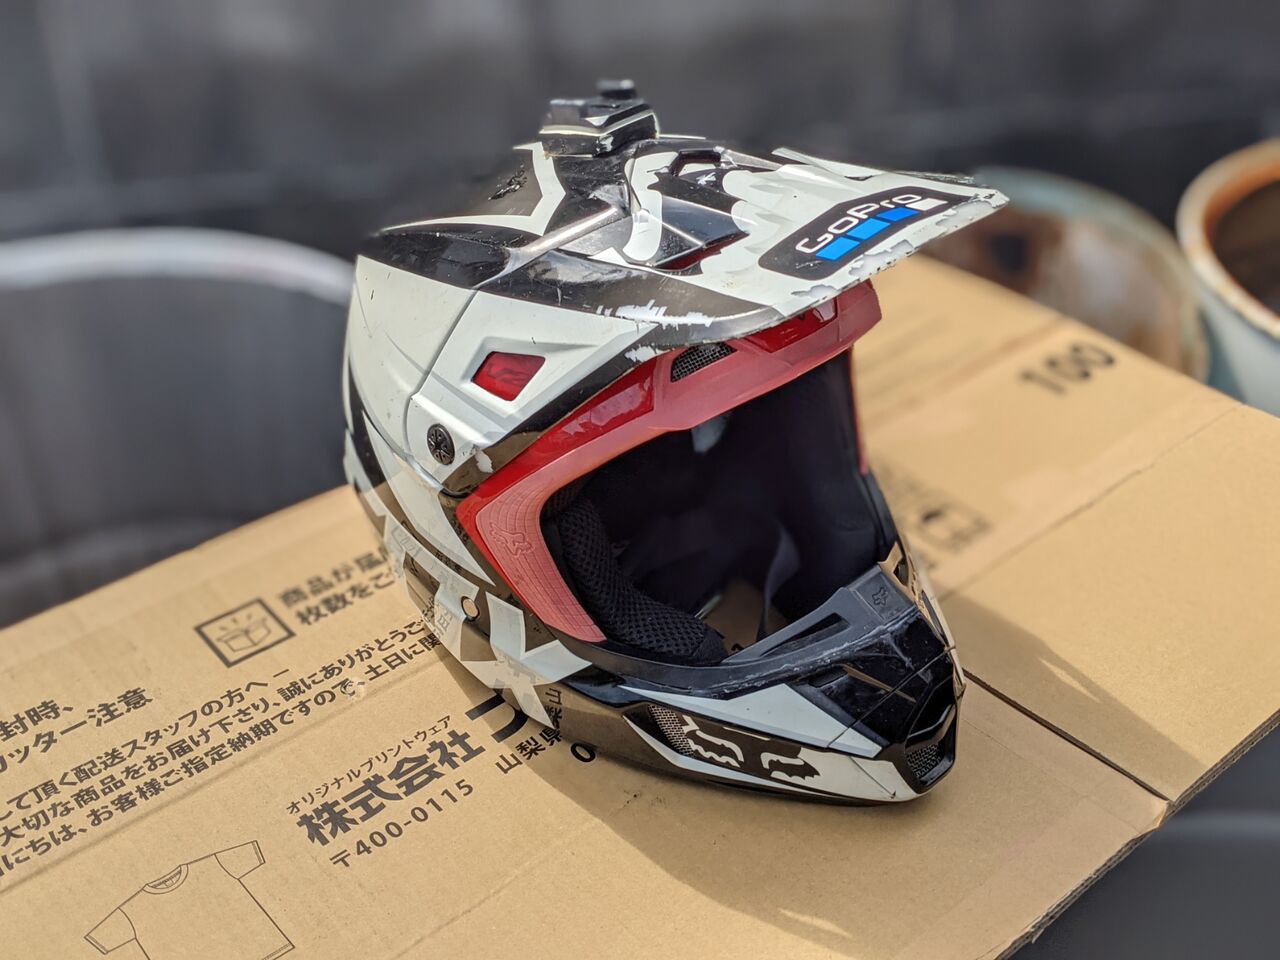 airoh twist 2.0 レビュー 紆余曲折したヘルメット購入の話 : OFFROAD 